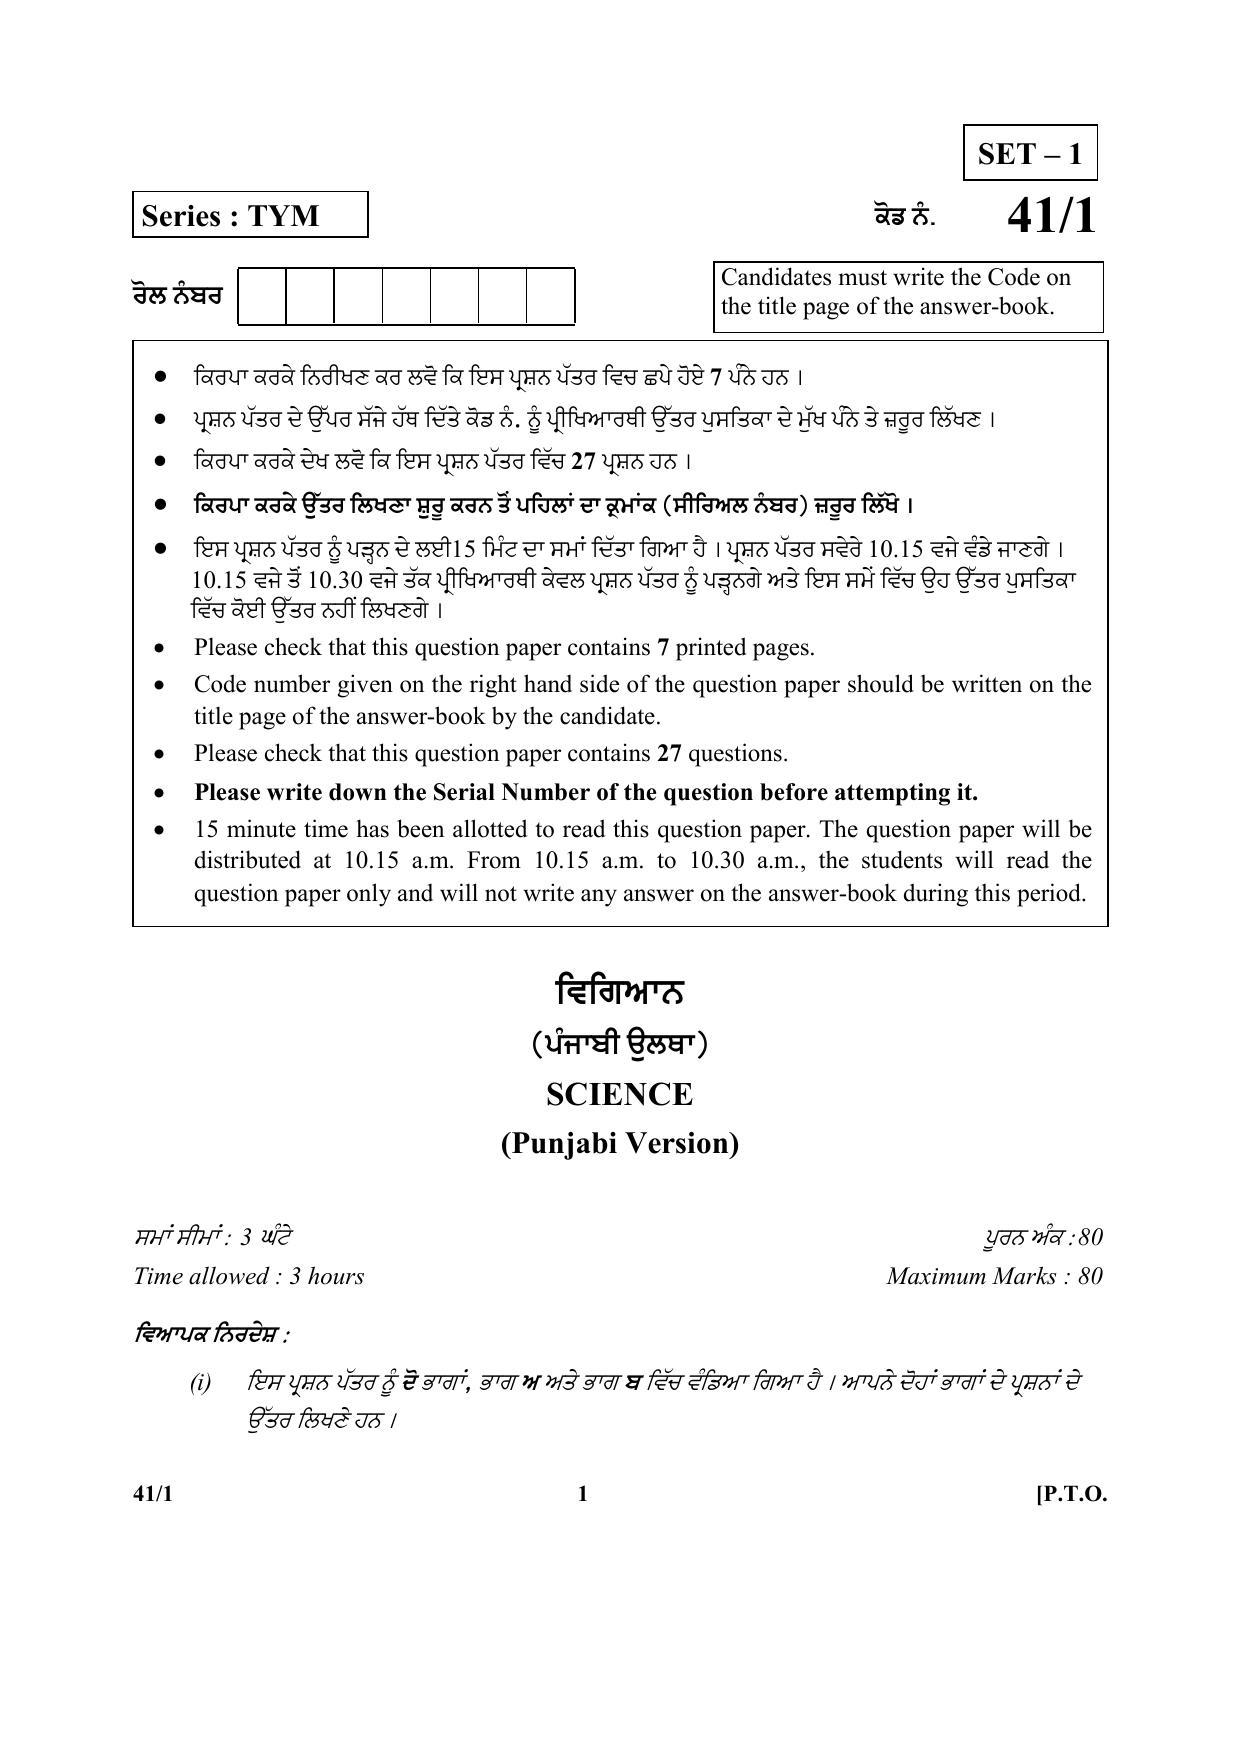 CBSE Class 10 41-1 (Science)_Punjabi 2018 Question Paper - Page 1